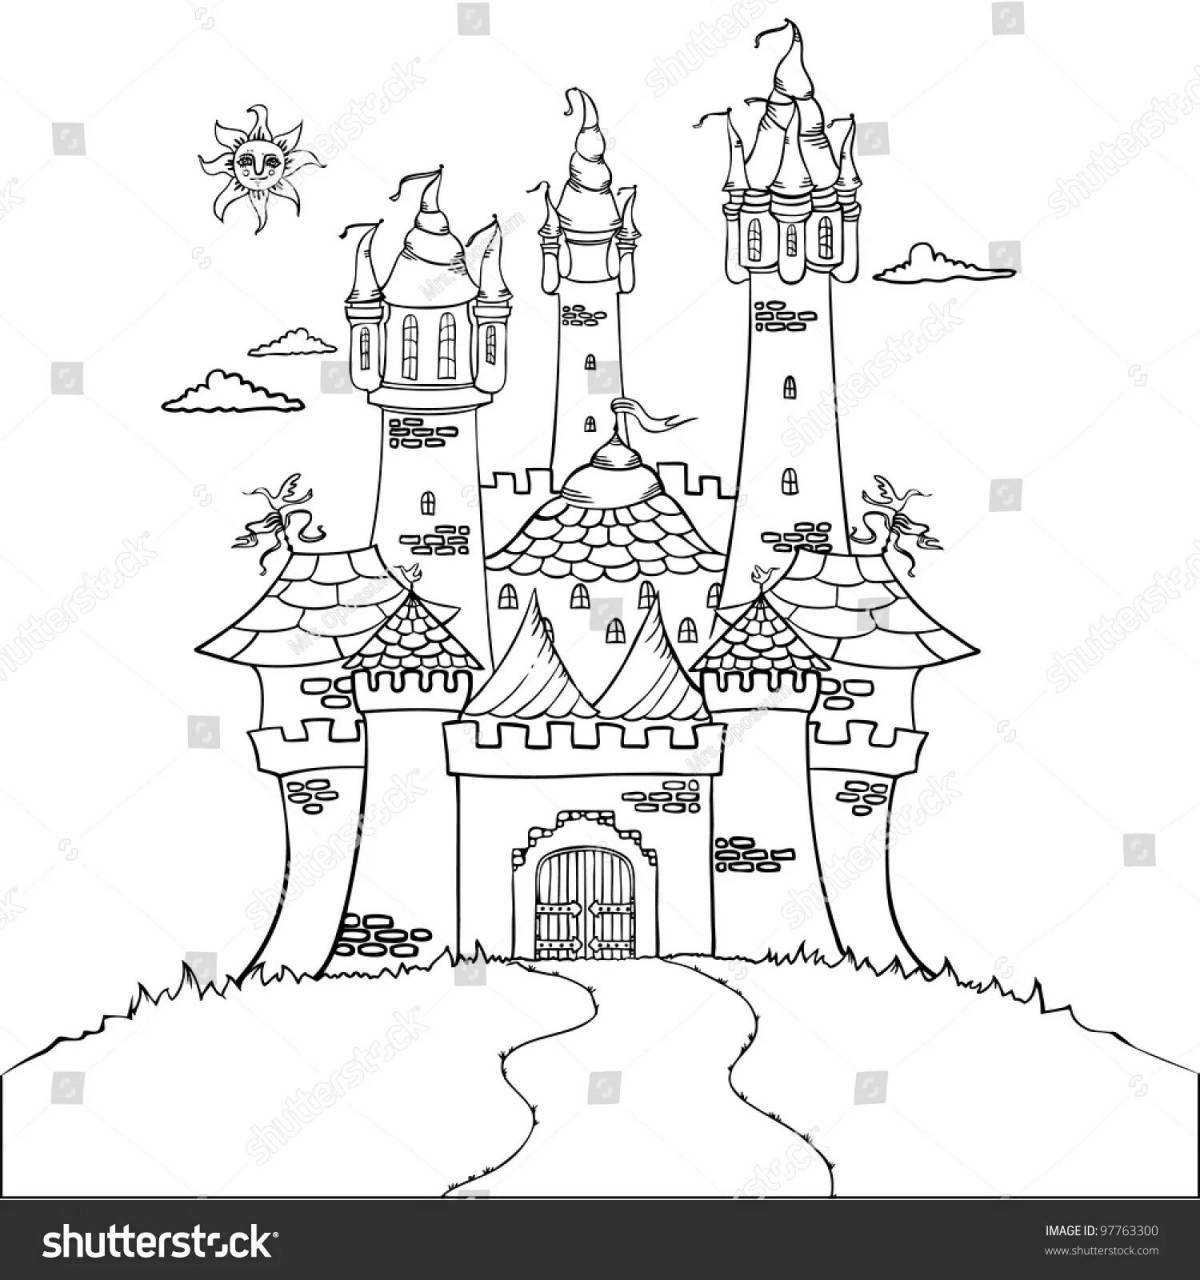 Shiny magic castle coloring book